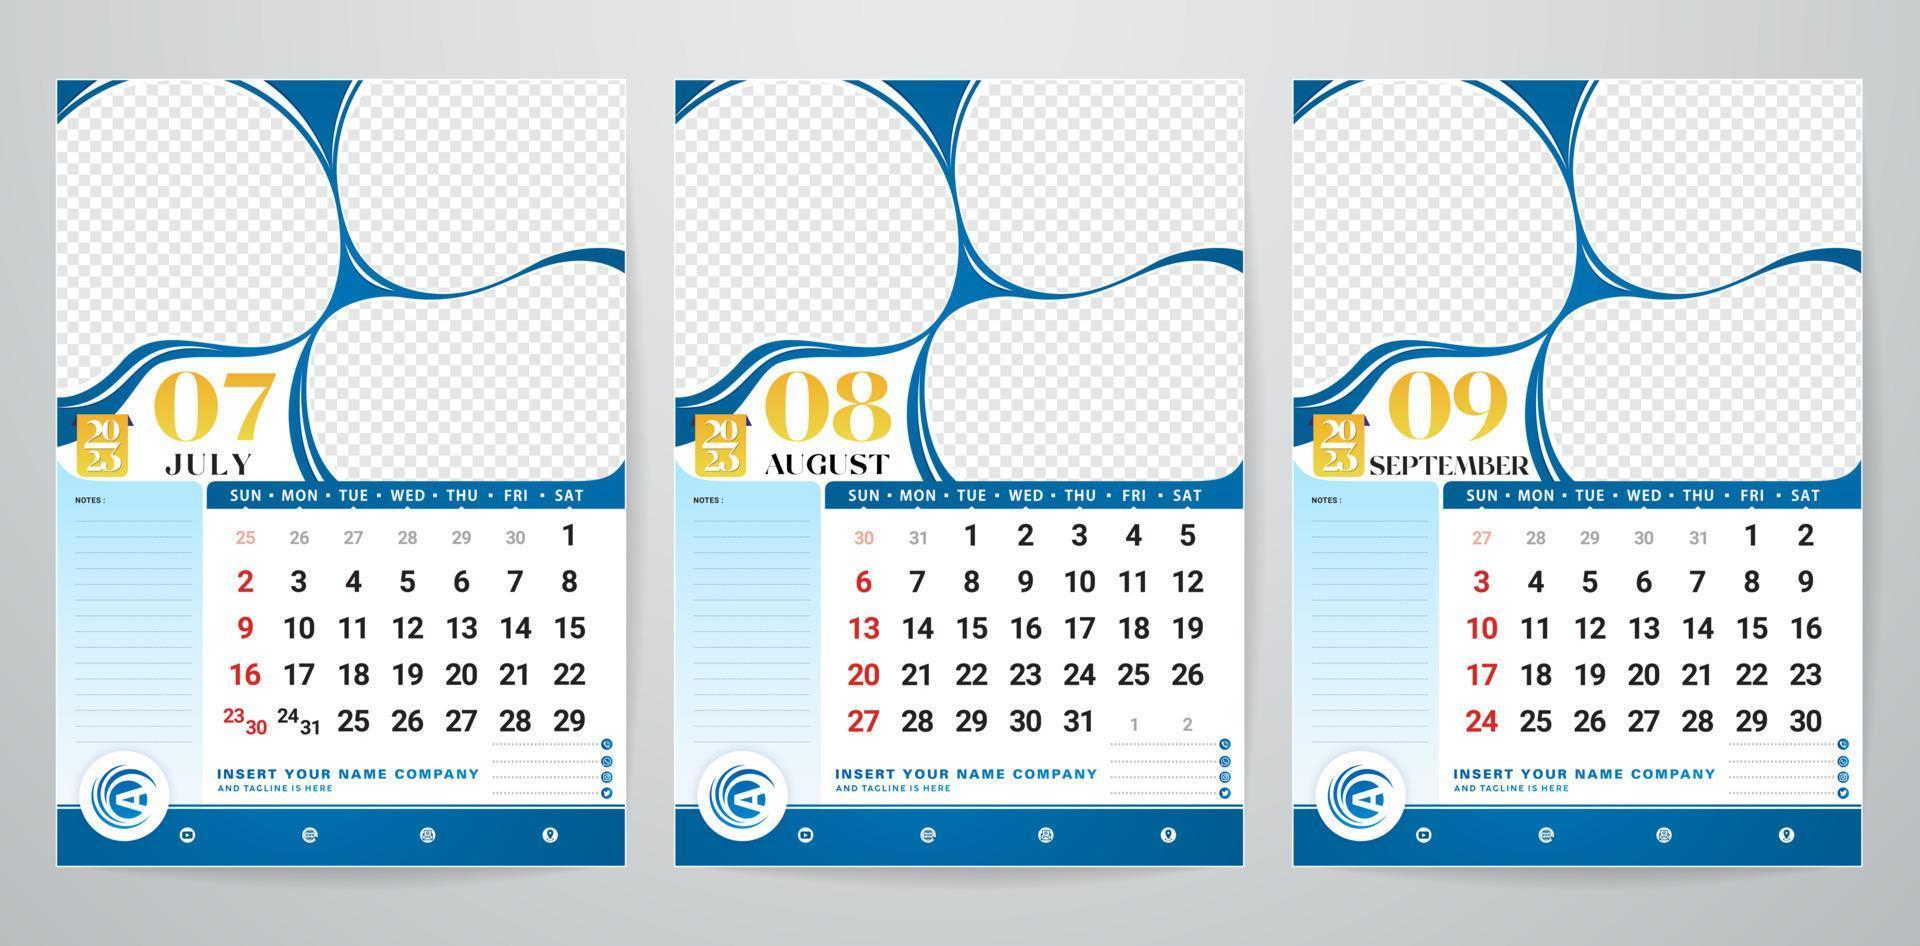 juli august september 2023 kalendervorlagen konzept dritte monate für büroplaner, corporate design planervorlage. Veranstaltungskalenderkonzepte, minimaler Projektkatalog, druckfertiges Papier vektor